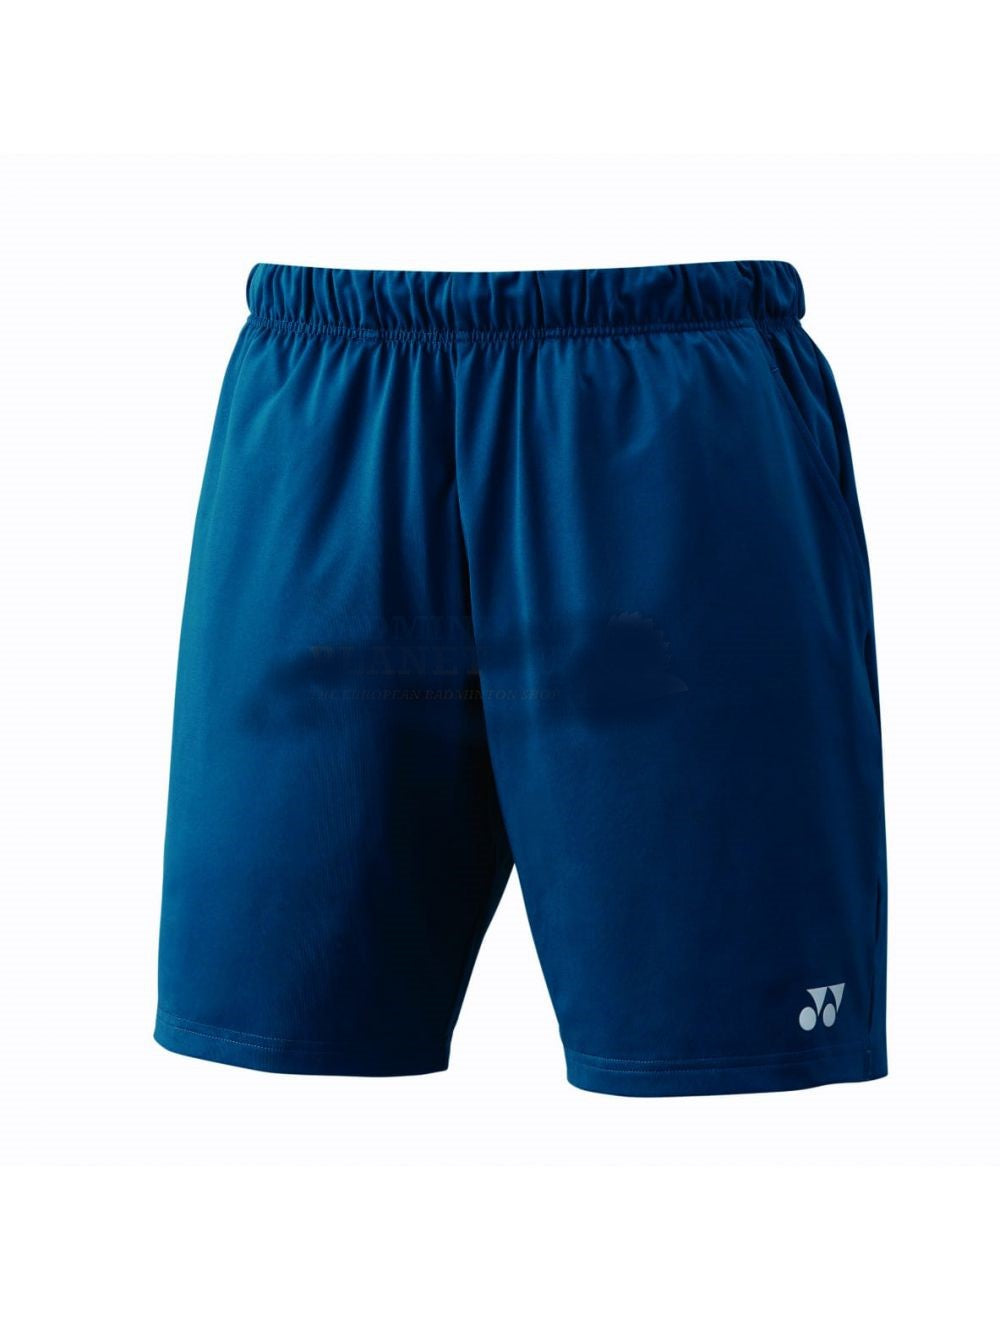 Yonex 15076 Tournament Style Shorts (Marine Blue)